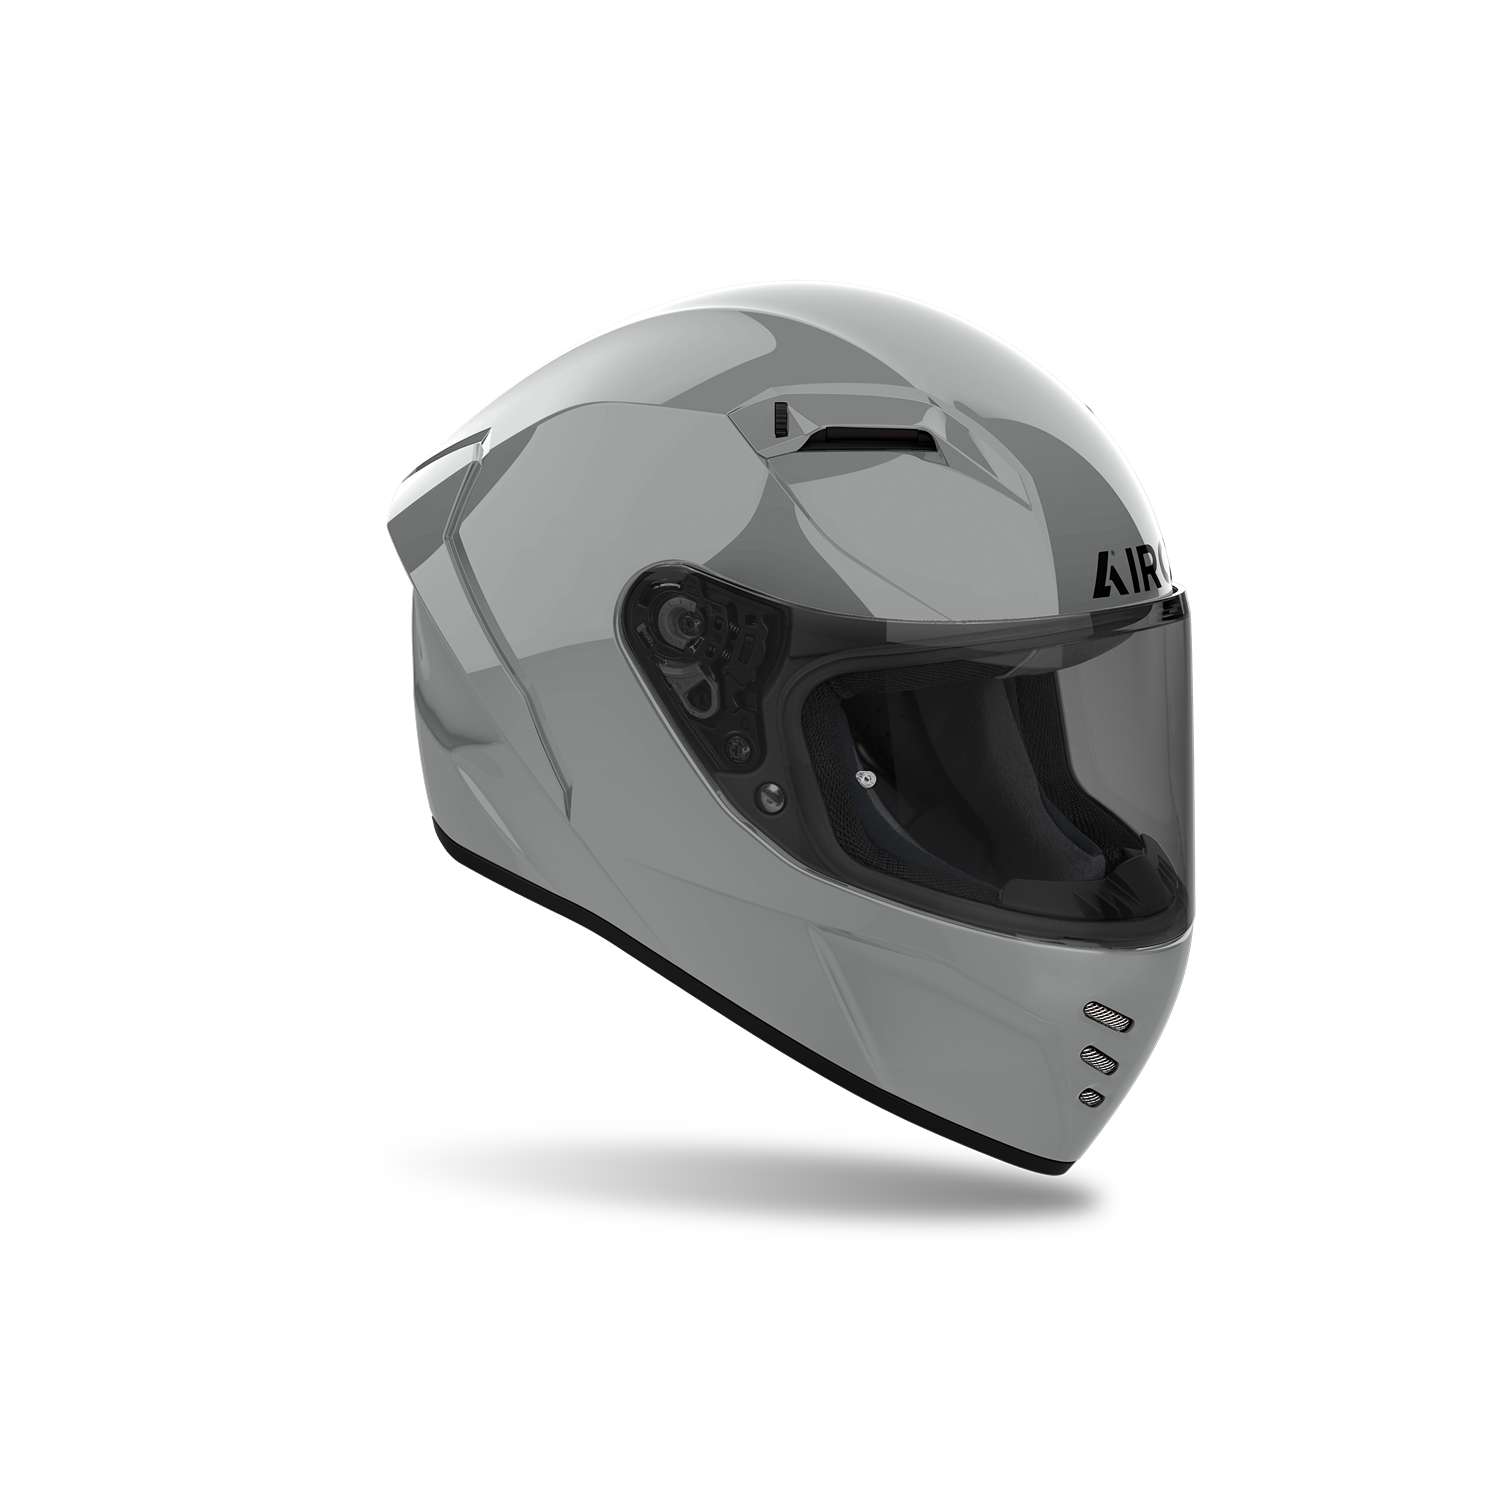 Image of EU Airoh Helmet Connor Light Gray Full Face Helmet Taille L